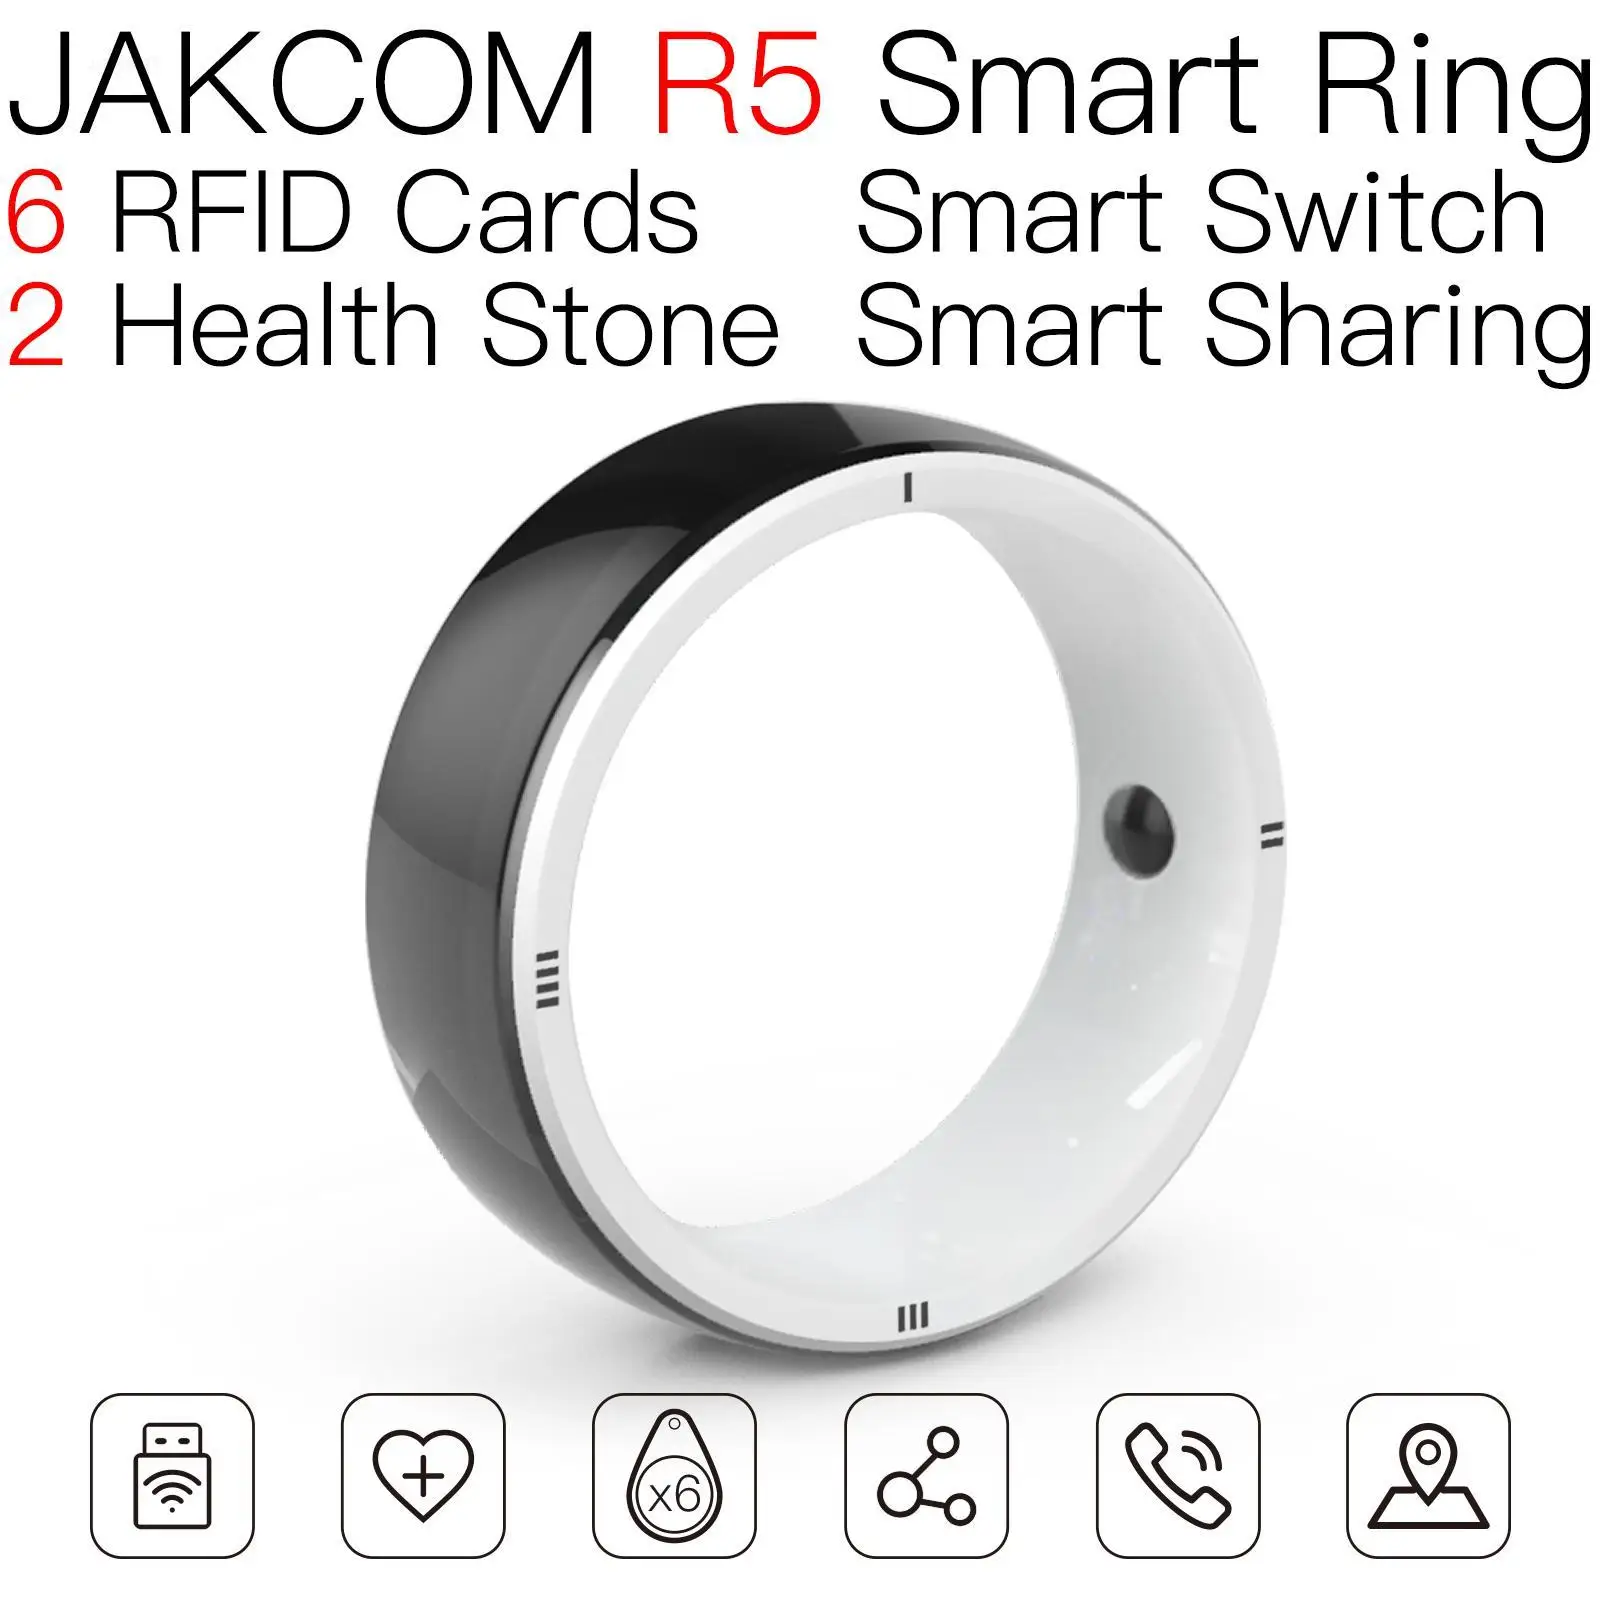 

JAKCOM R5 Smart Ring Best gift with 4k rewritable rfid ear tags 10mm uhf tag proxmark3 portable netflix account deutsch